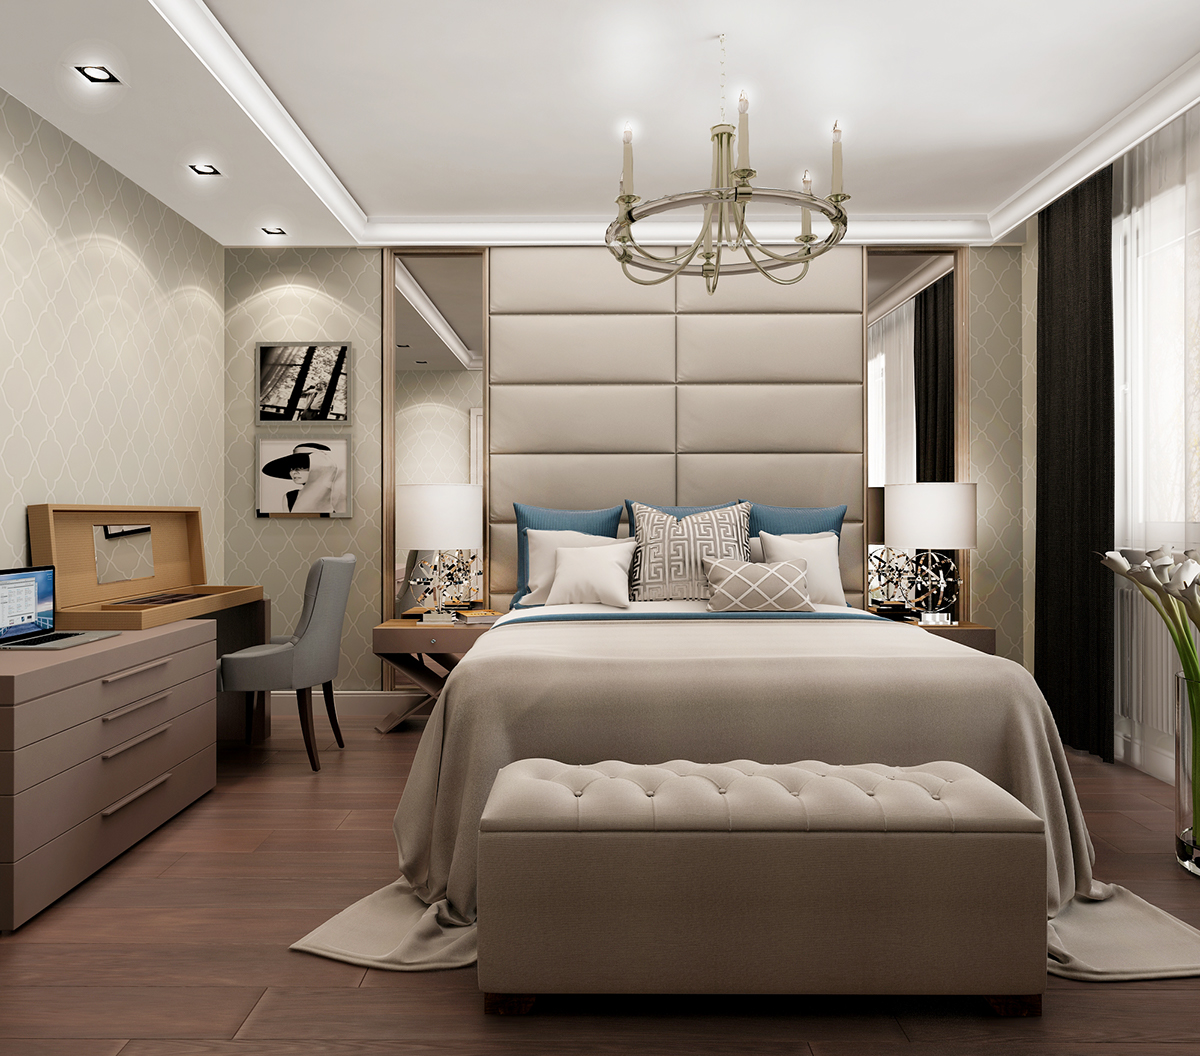 vray visualisation 3dmax house Render Interior design modern